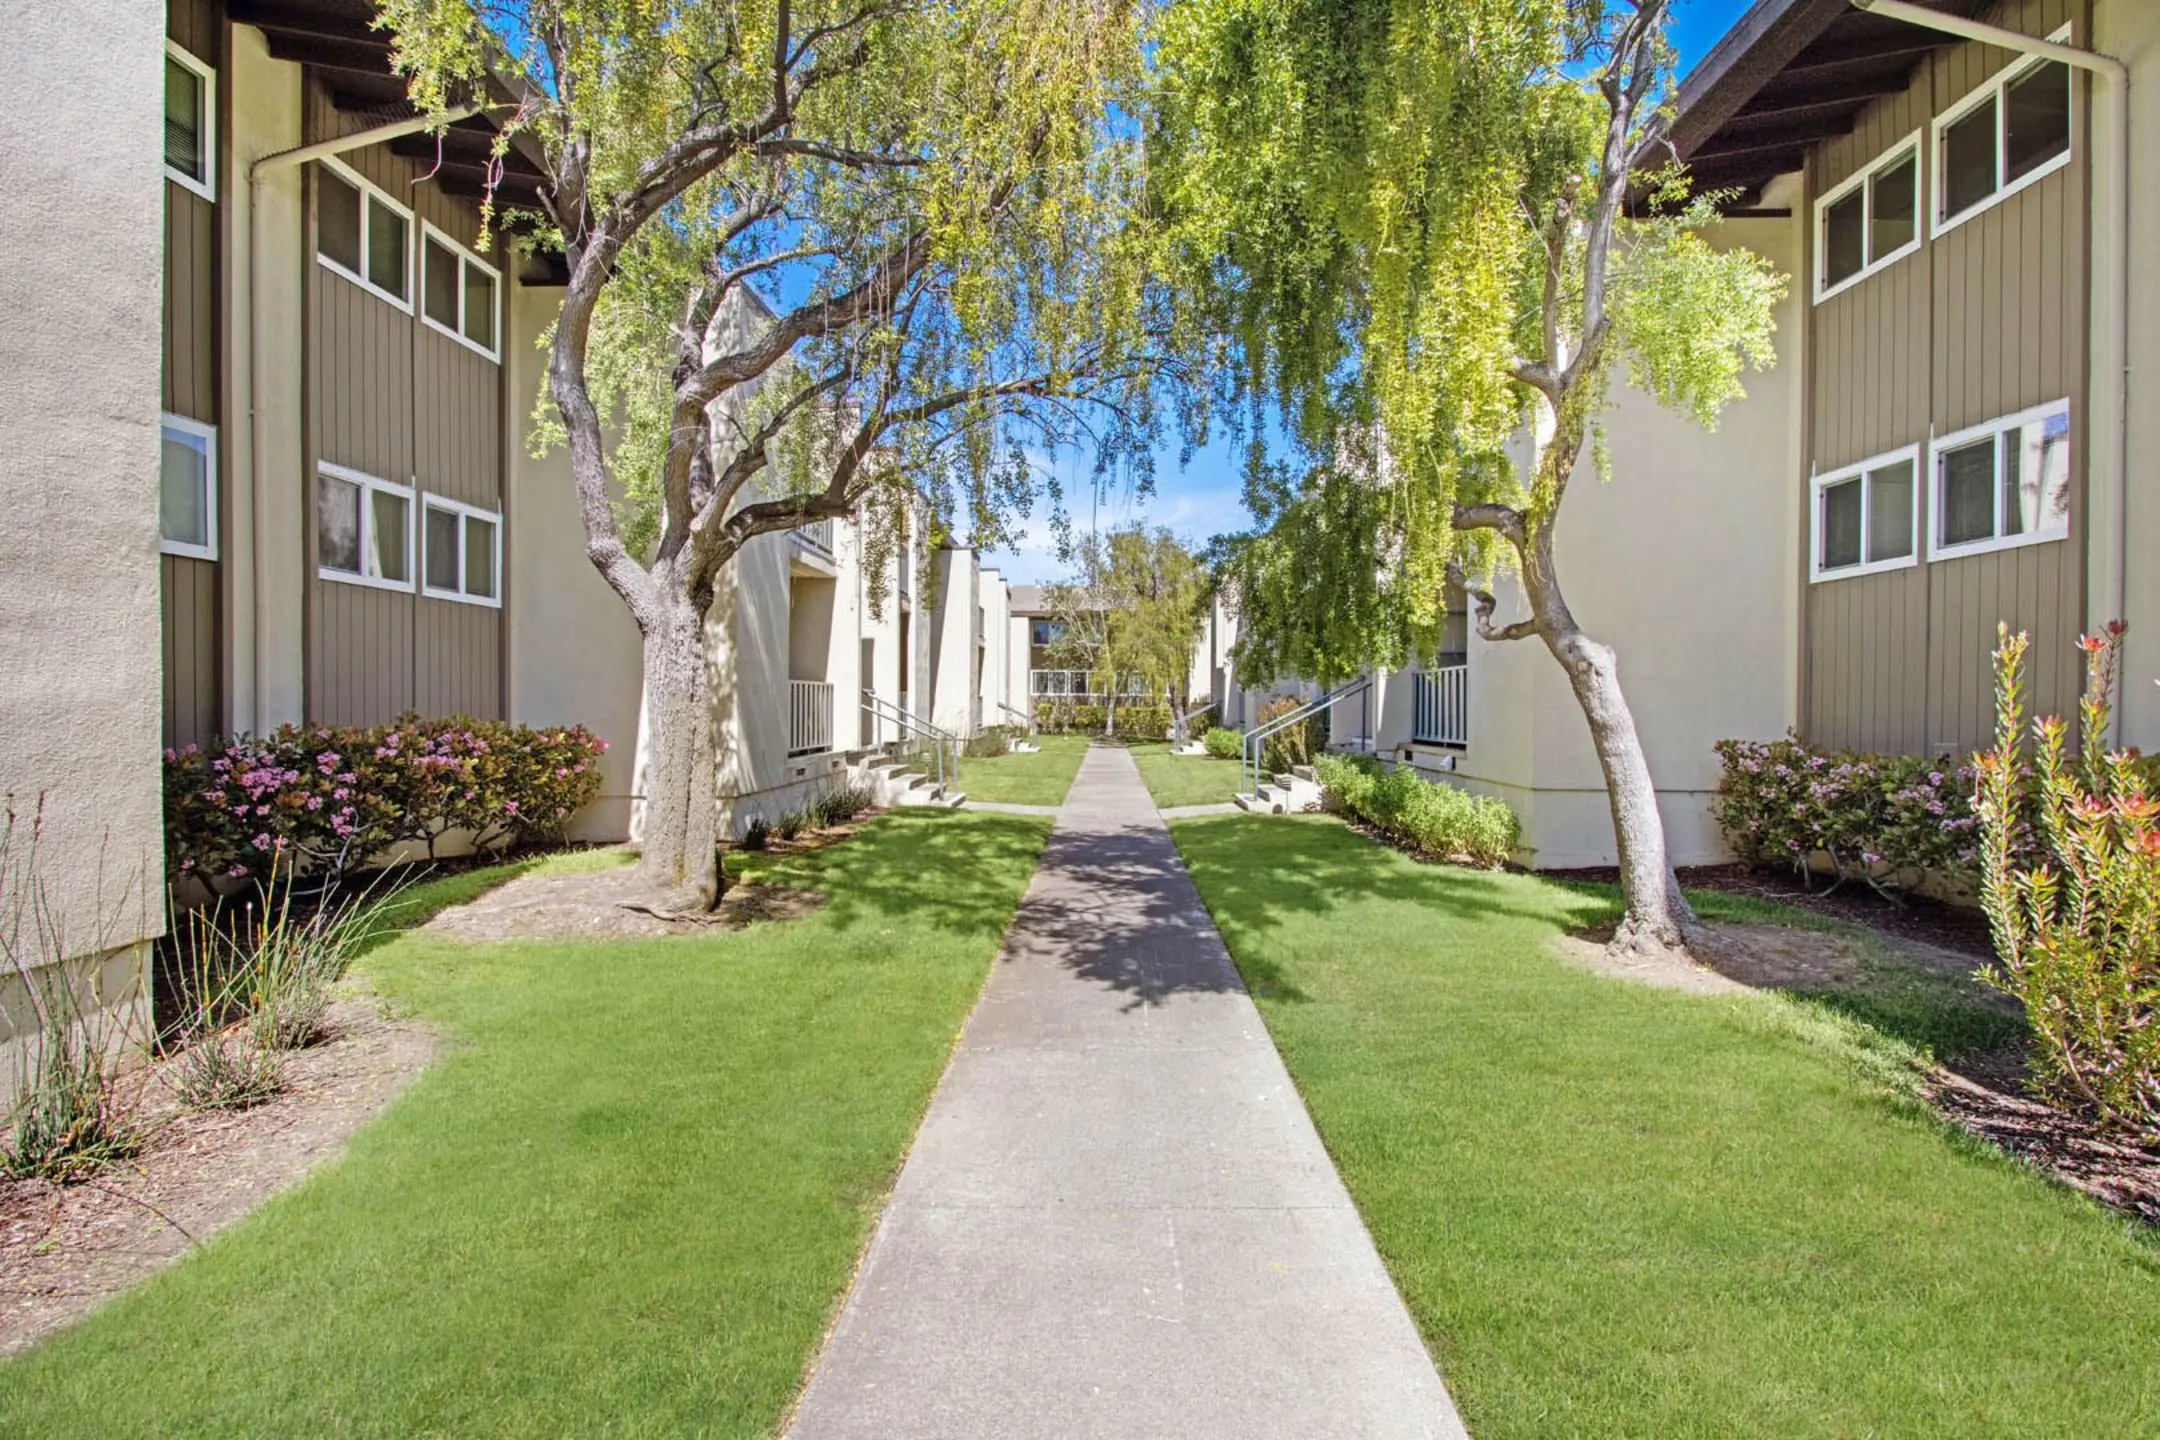 Building - Crestview Apartments - Belmont, CA